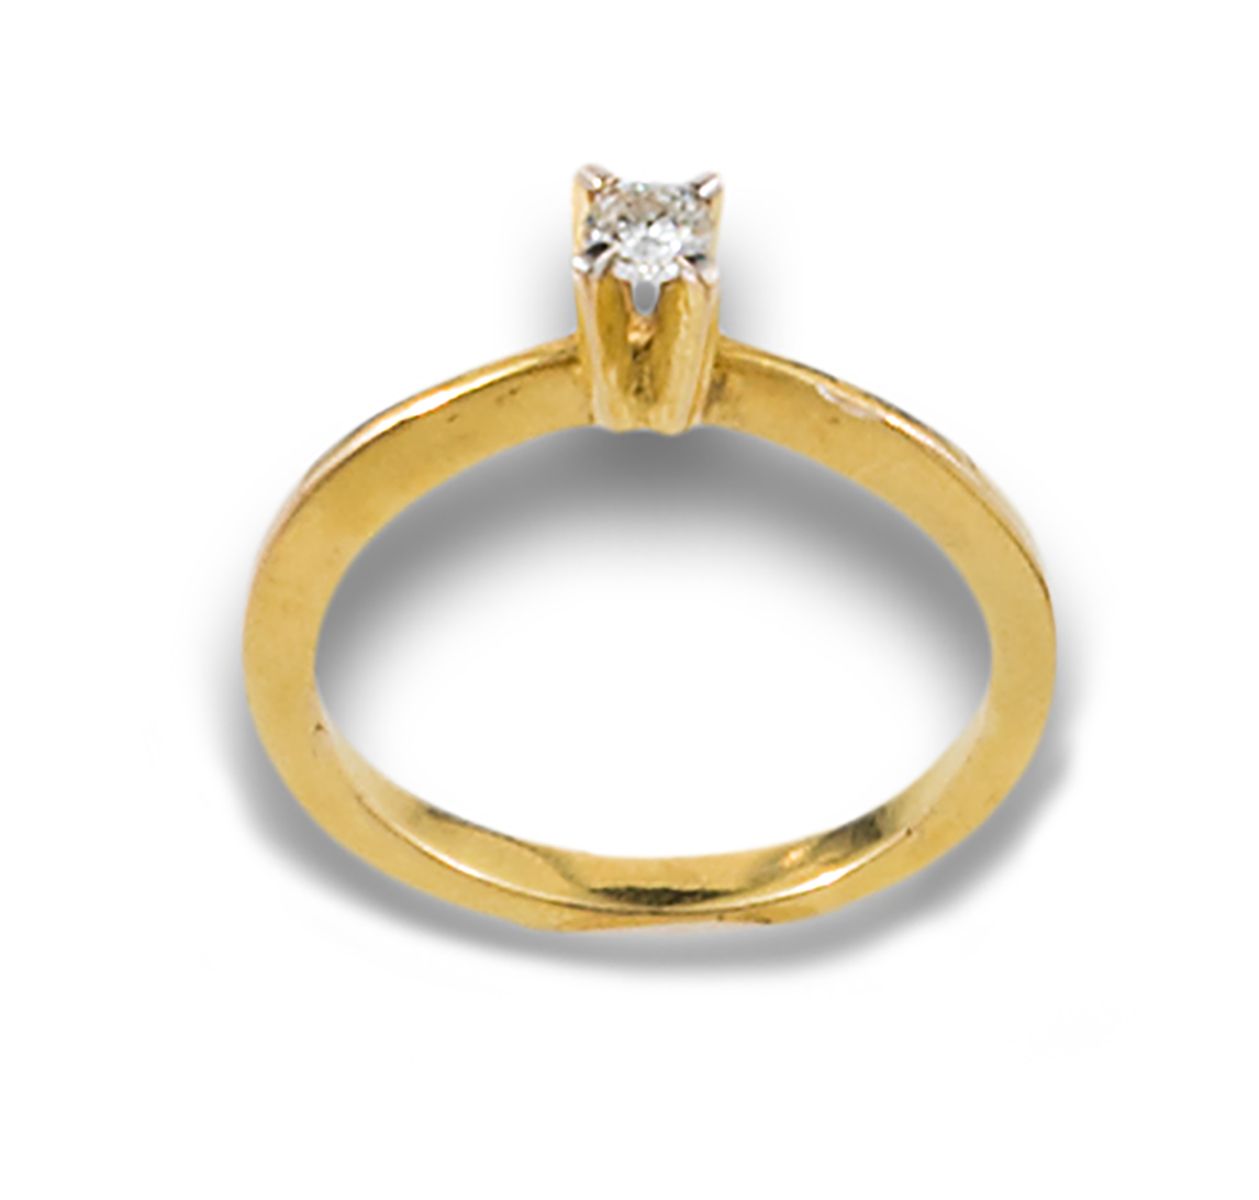 18 kt yellow gold solitaire ring. 由一颗明亮式切割钻石组成，估计重量为0.15克拉，镶嵌在四个爪子上。